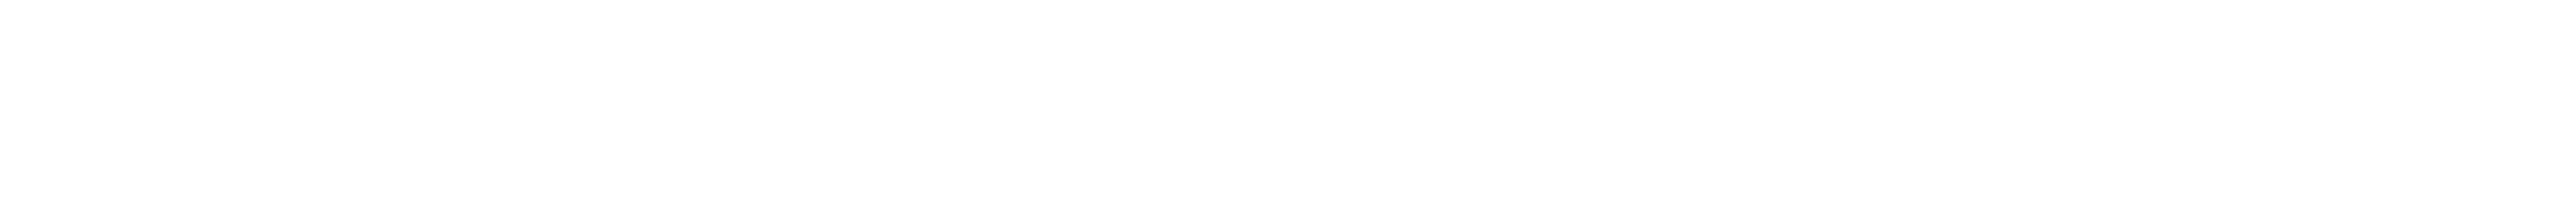 Kaizen Institute legal disclaimer